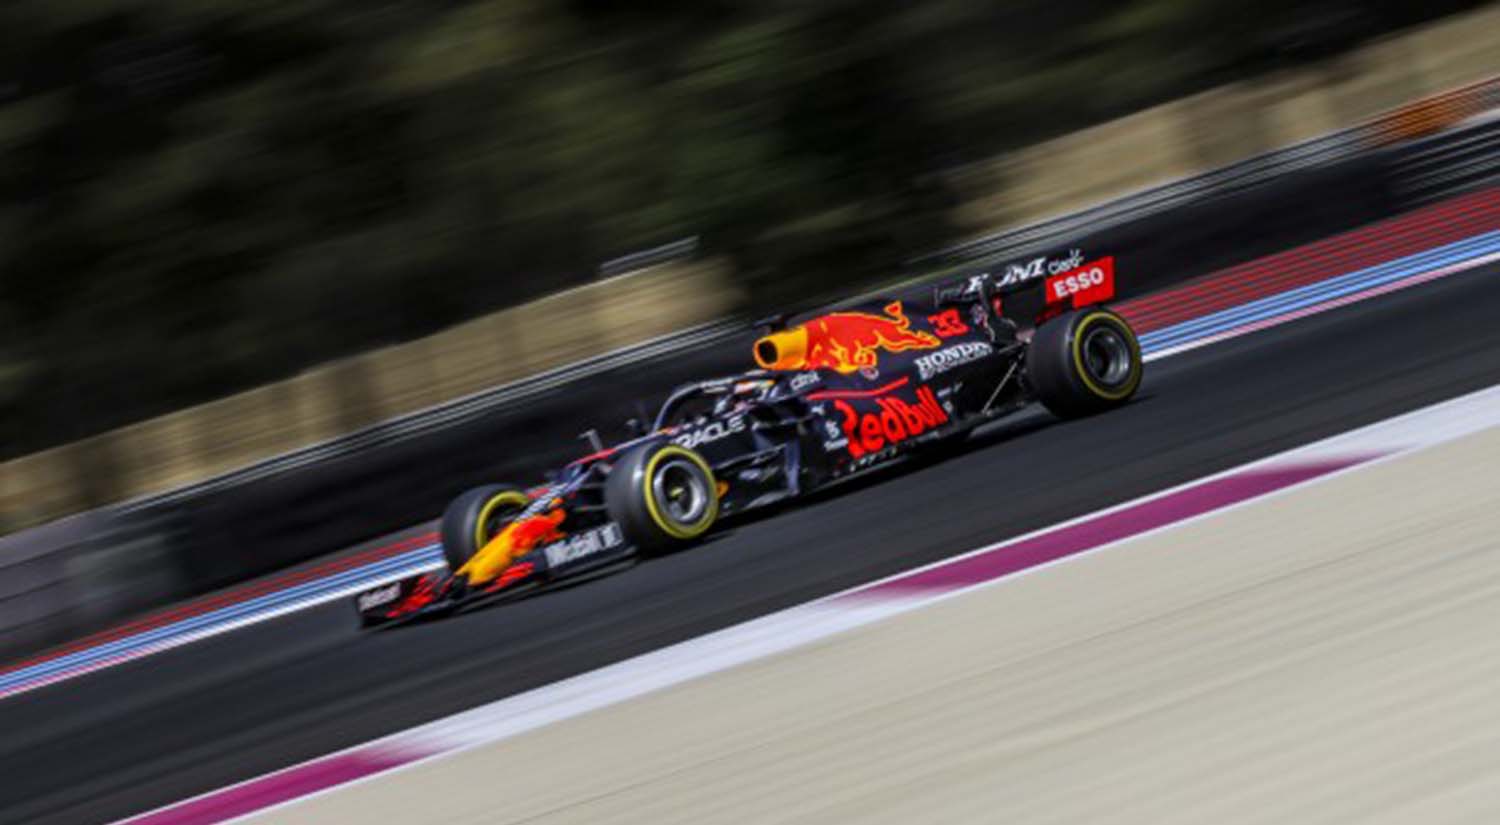 F1 – Verstappen Quickest In Final Practice At Paul Ricard